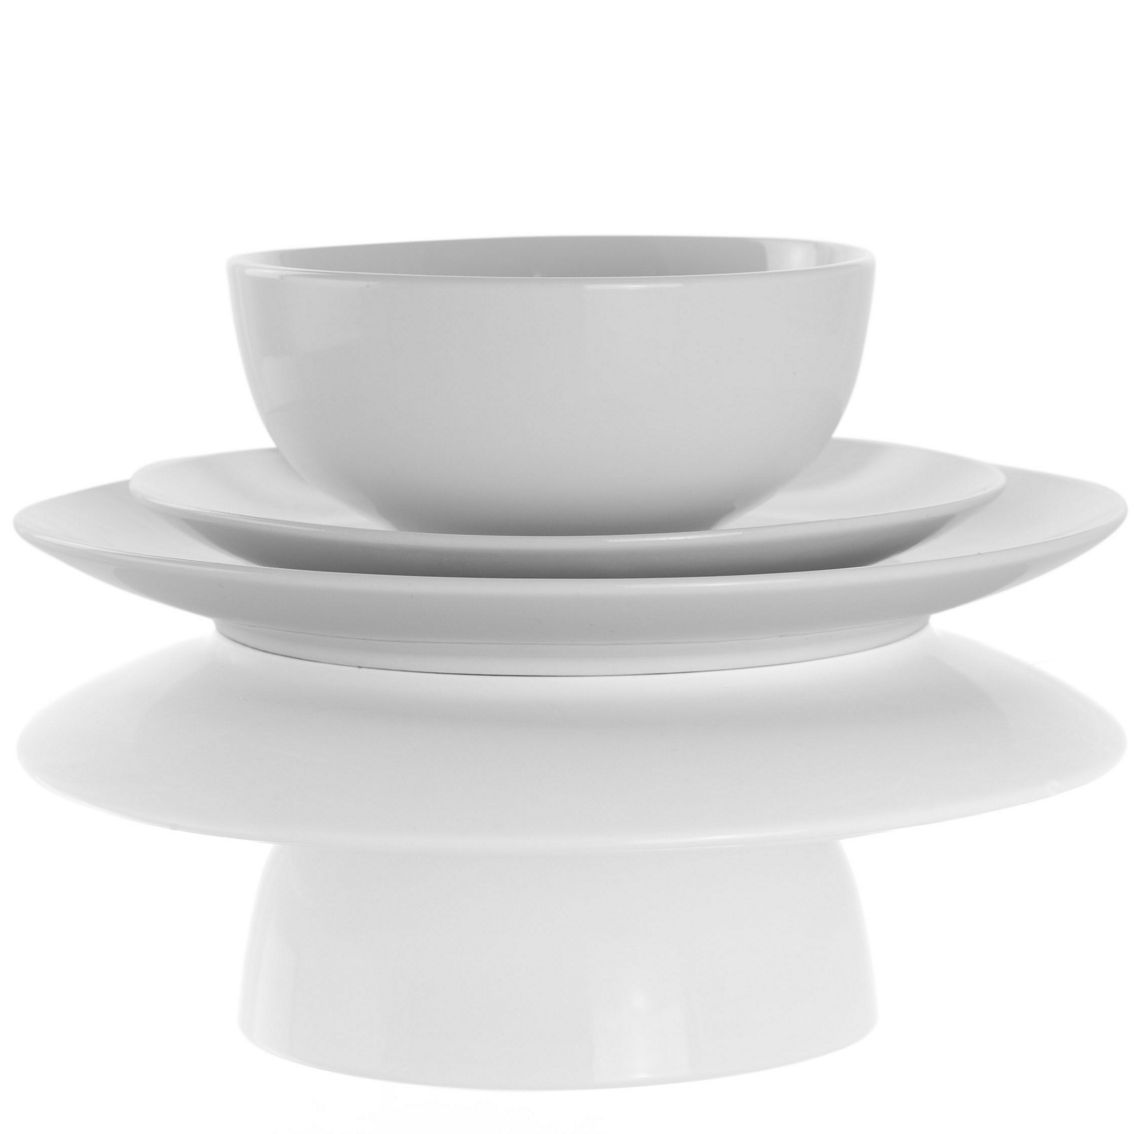 Elama Luna 18 Piece Porcelain Dinnerware Set in White - Image 2 of 5